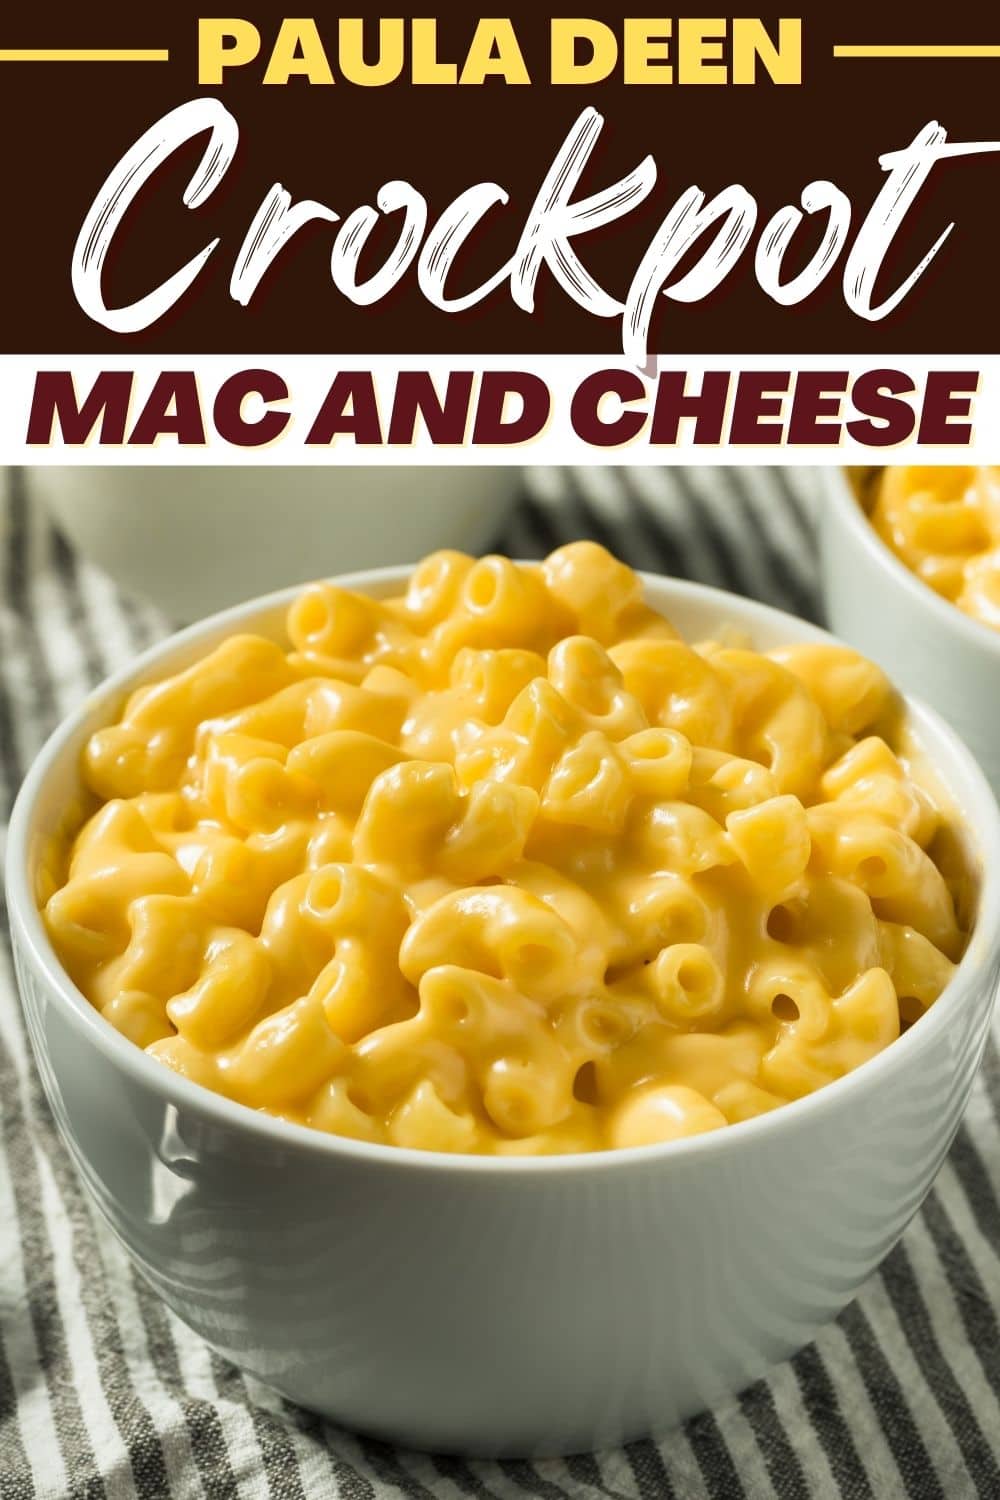 Paula Deen Crockpot Mac And Cheese Insanely Good